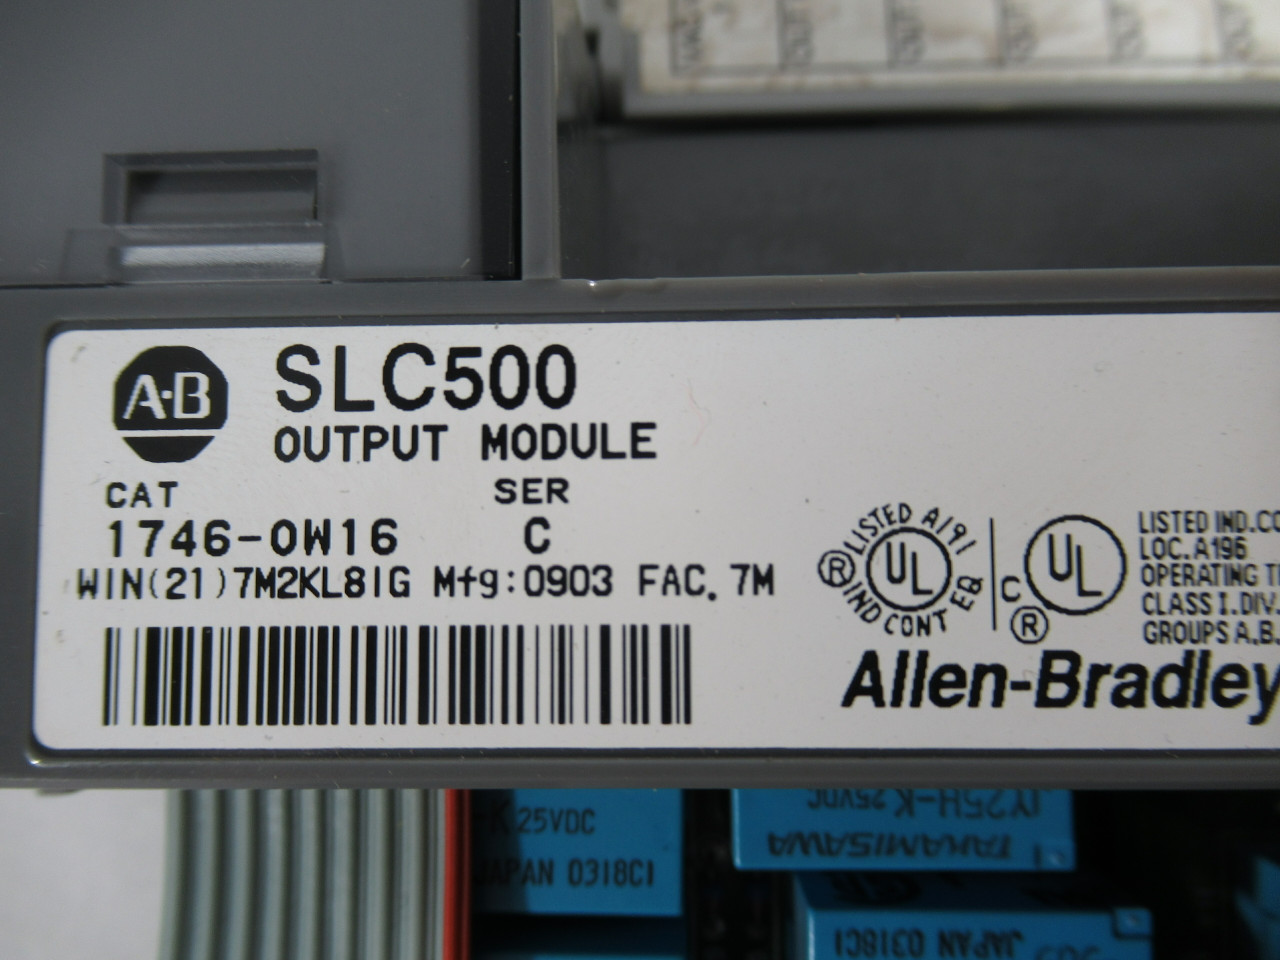 Allen-Bradley 1746-OW16 Output Module SER C 459020-0331 MISSING TERMINAL USED